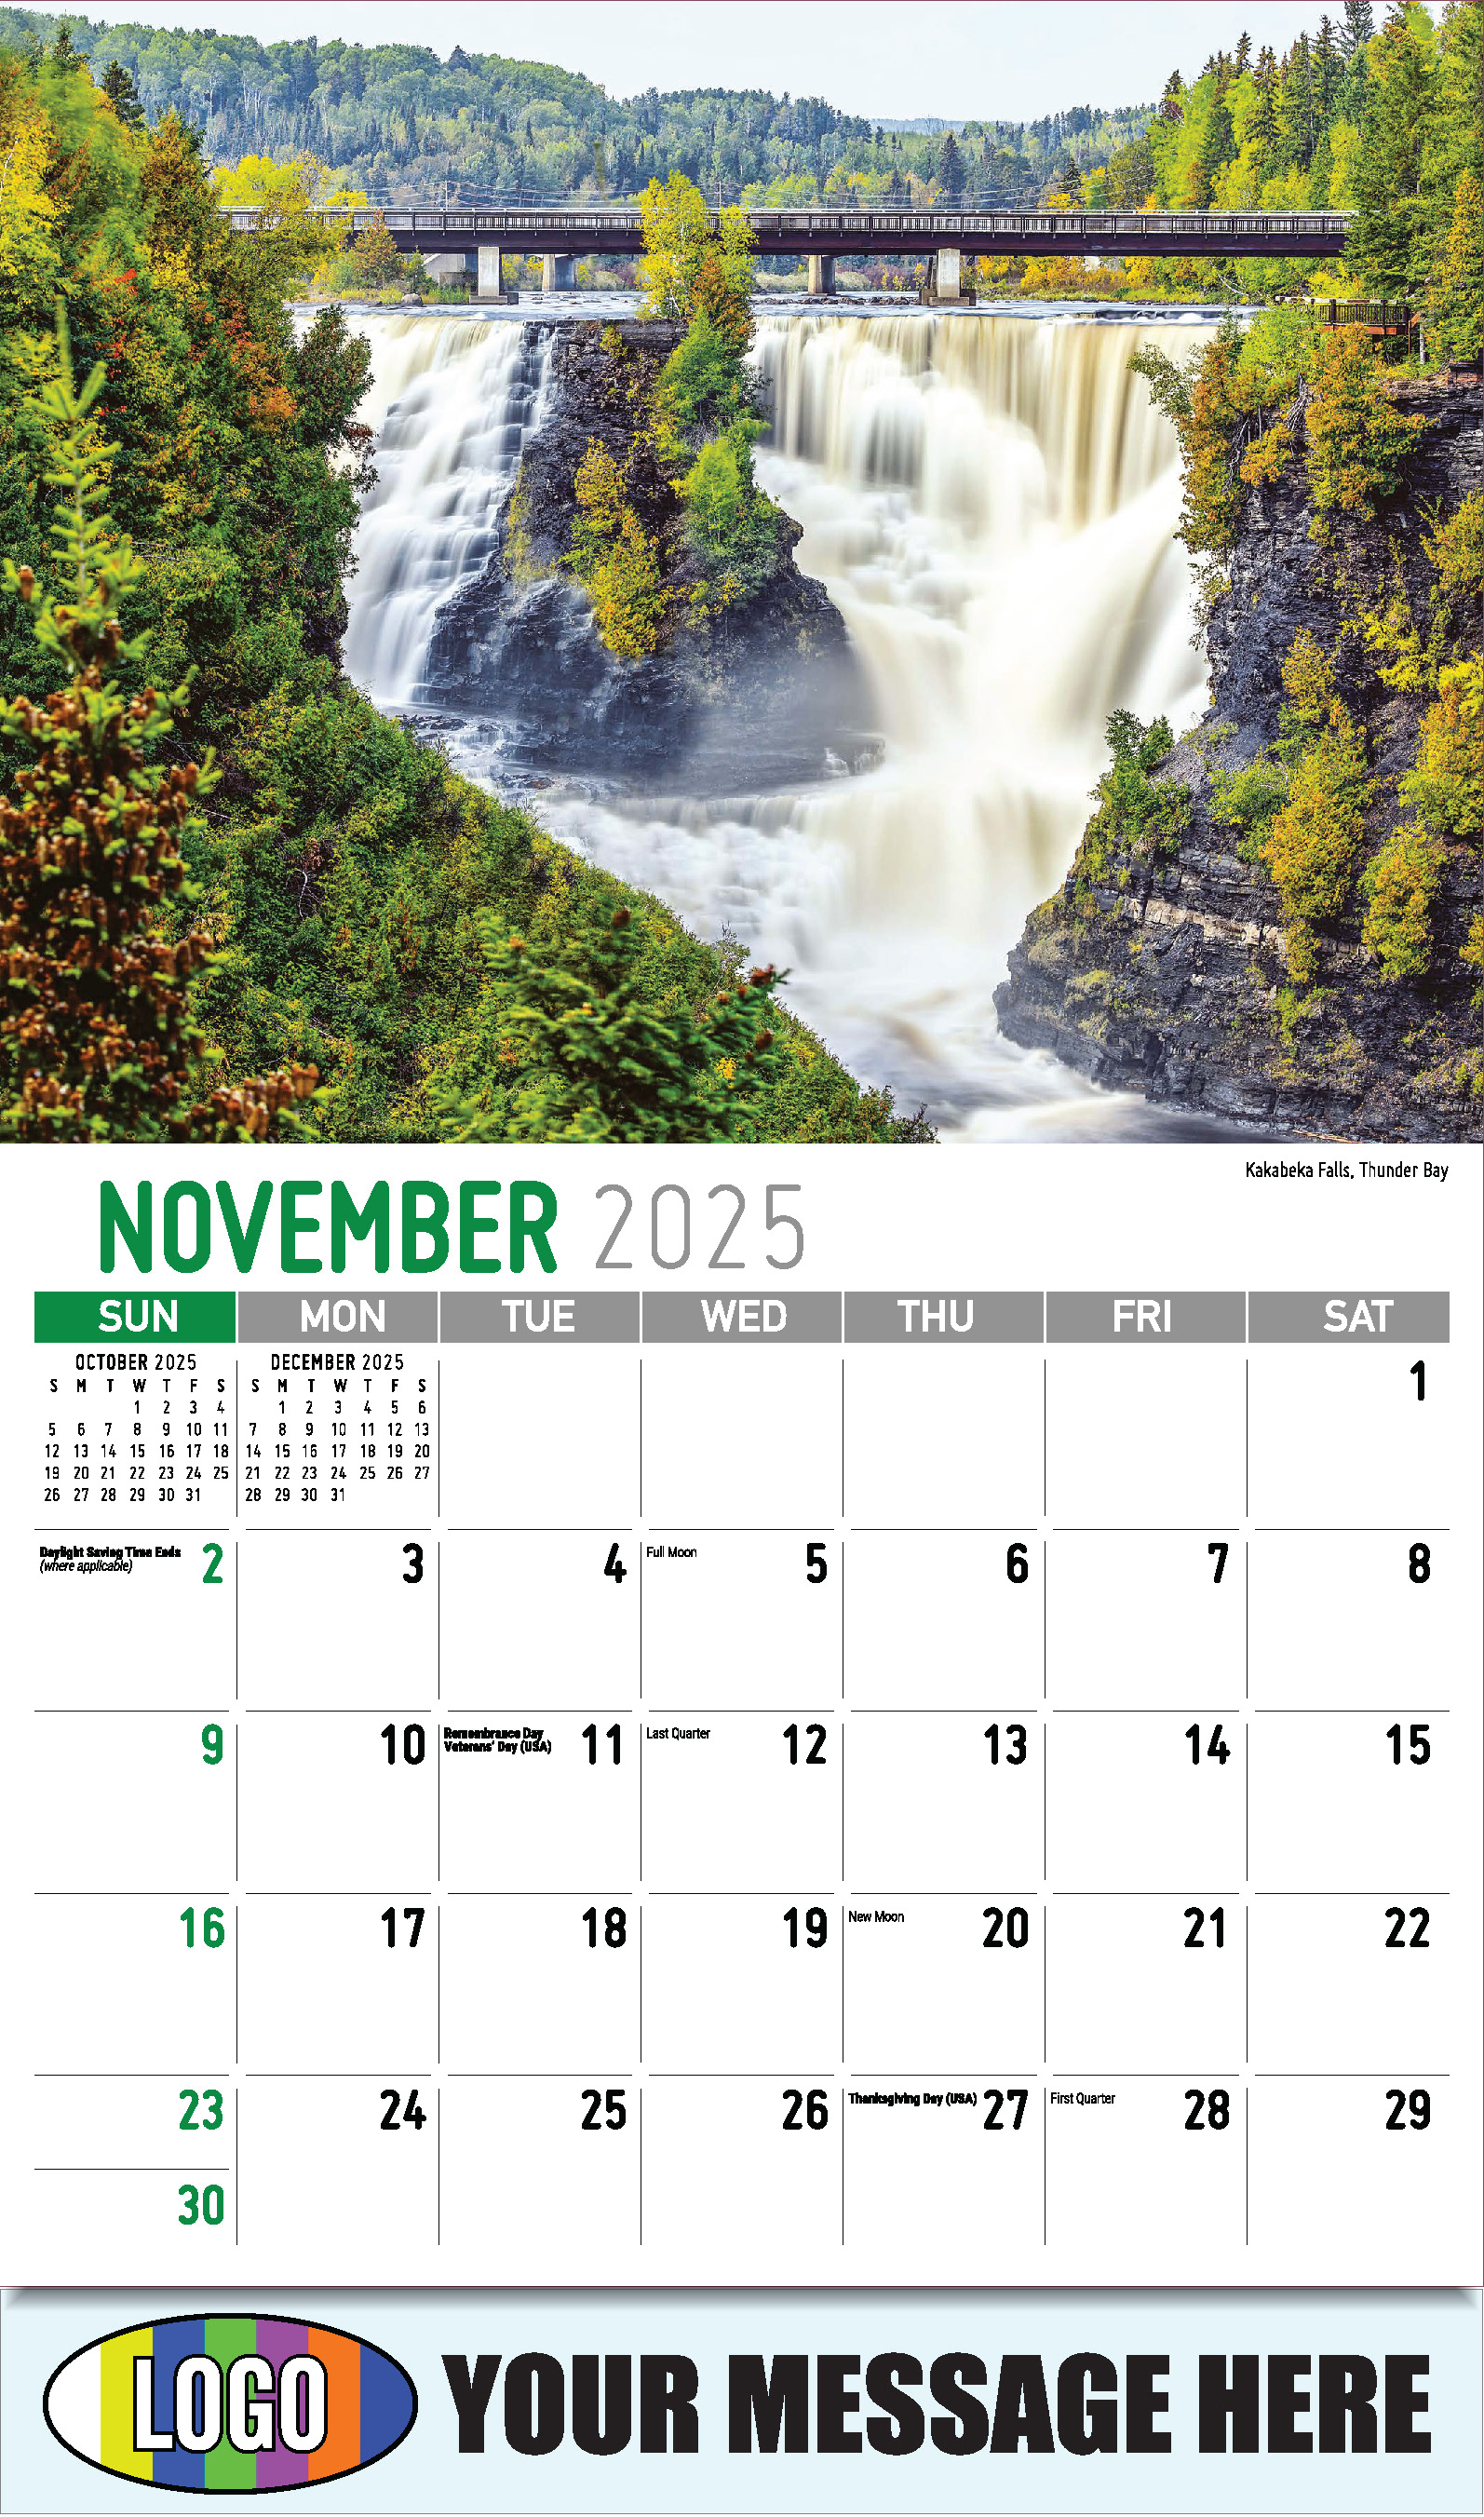 Scenes of Ontario 2025 Business Promo Wall Calendar - November